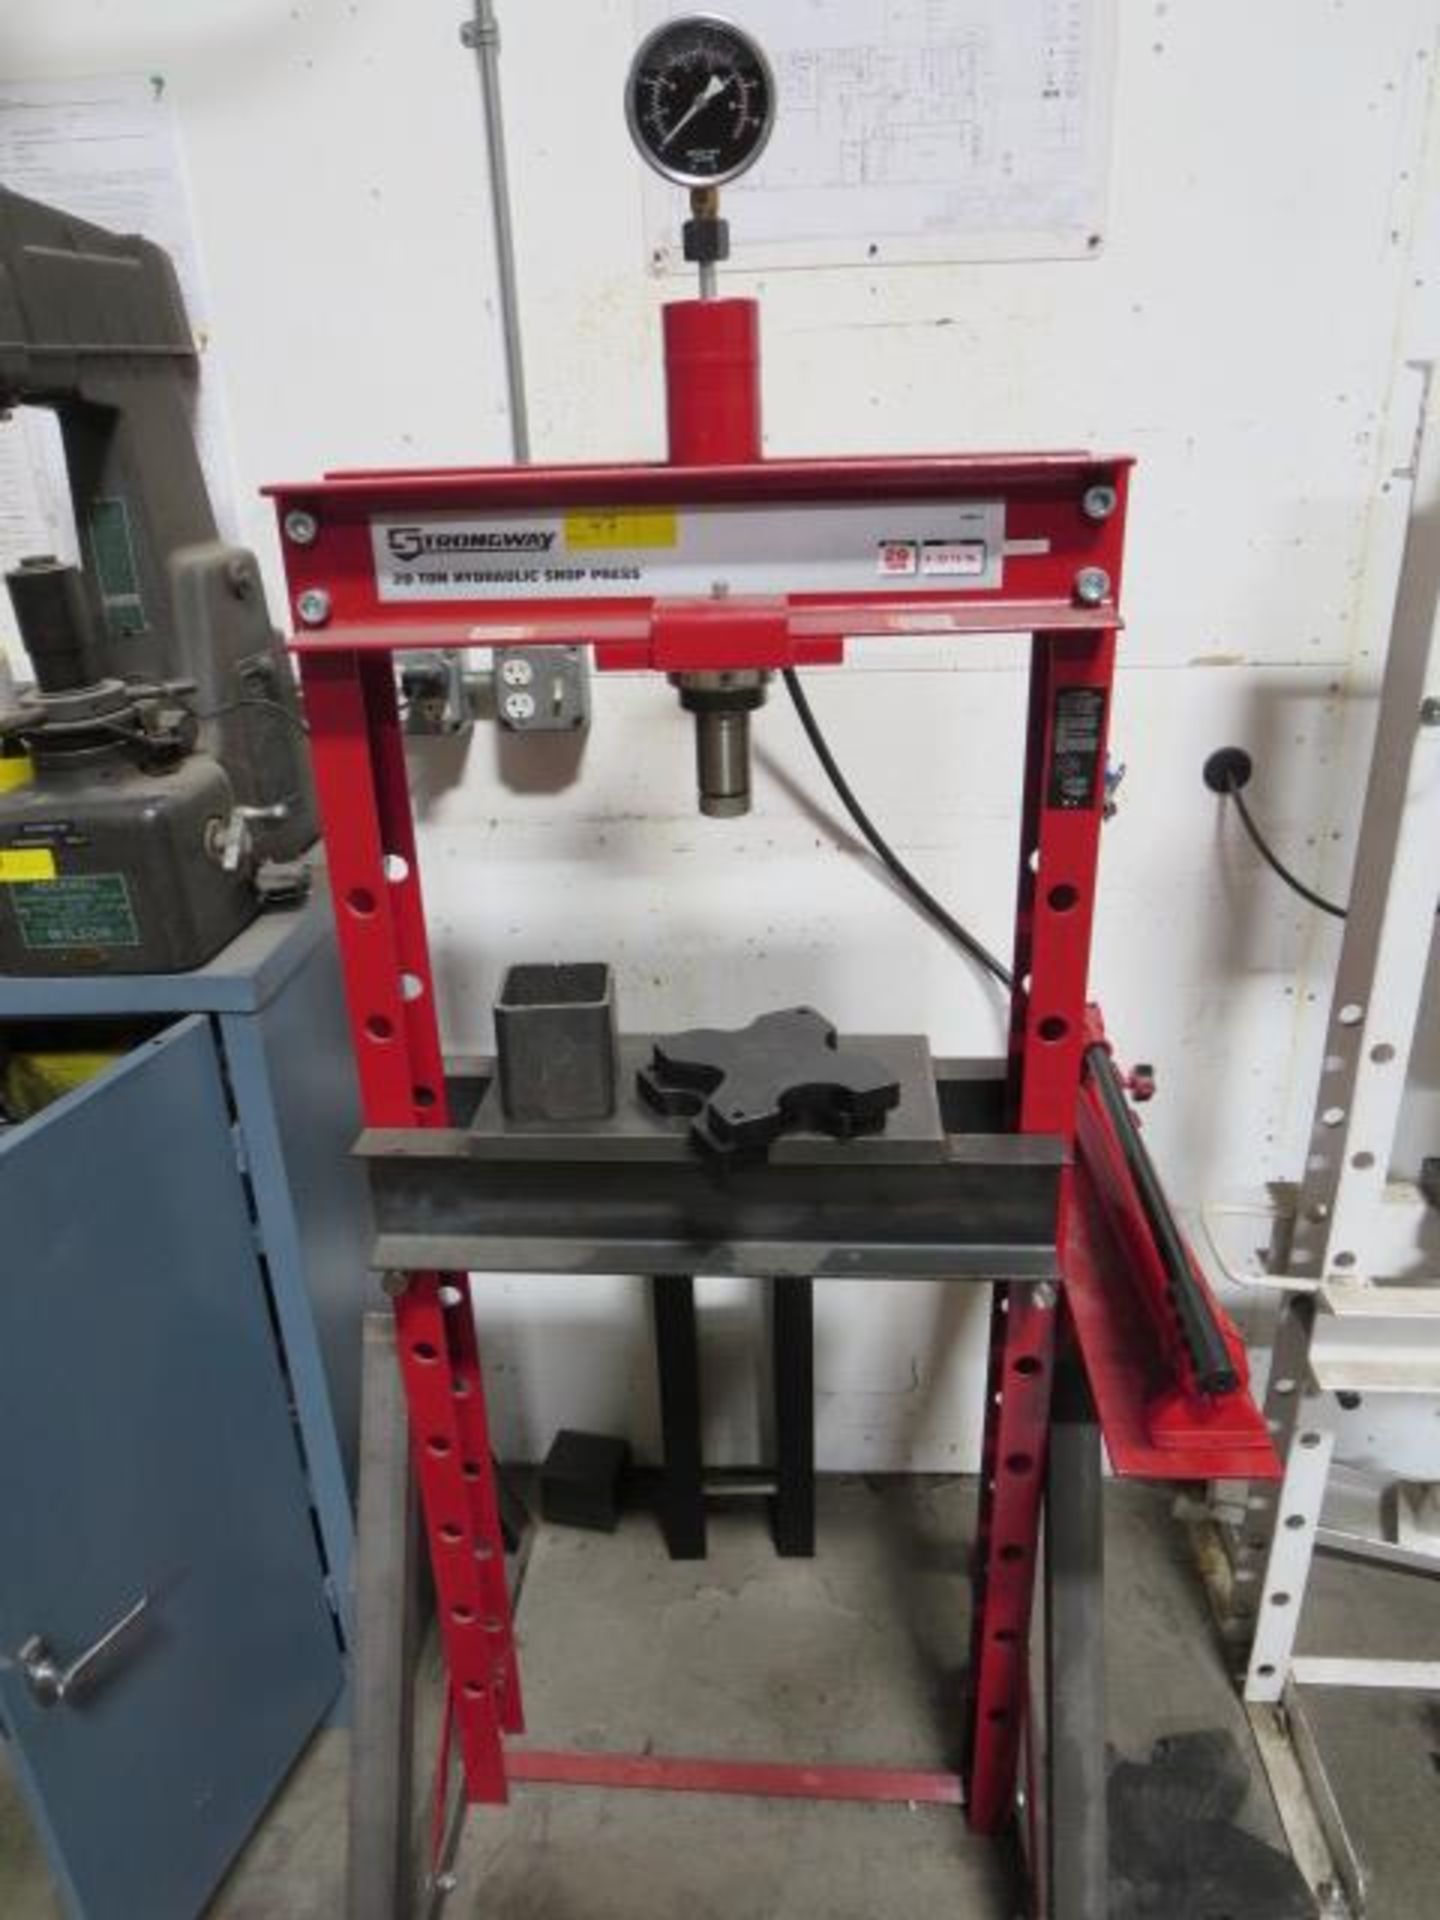 Strongly 20Ton Hydraulic Shop Press, model 46271